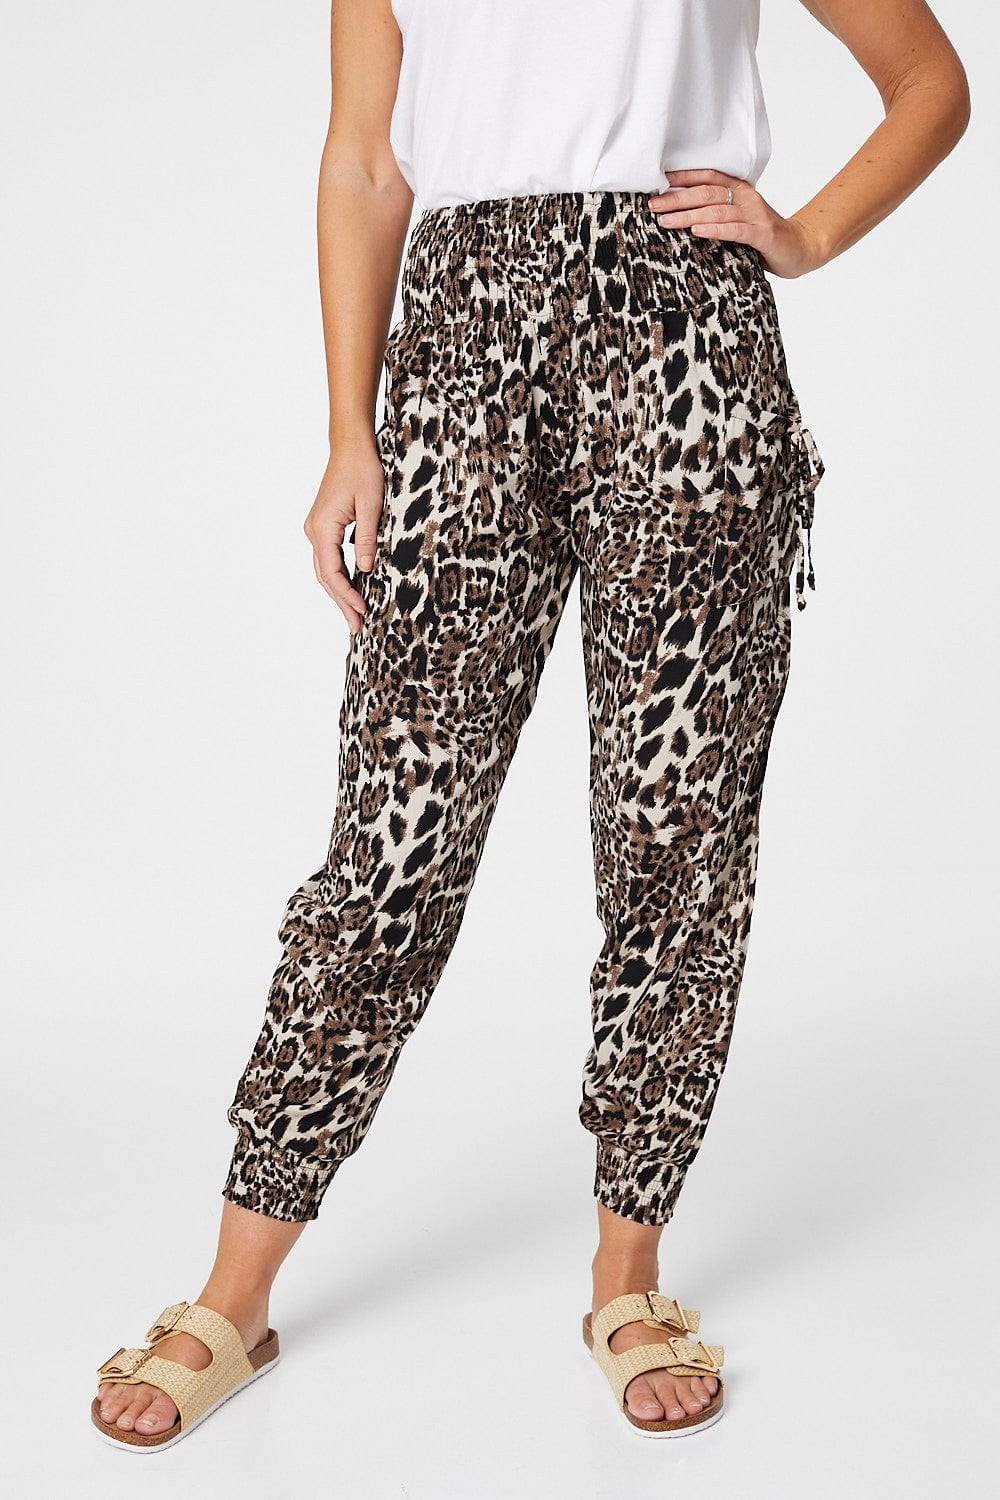 Tan | Leopard Print Harem Pants